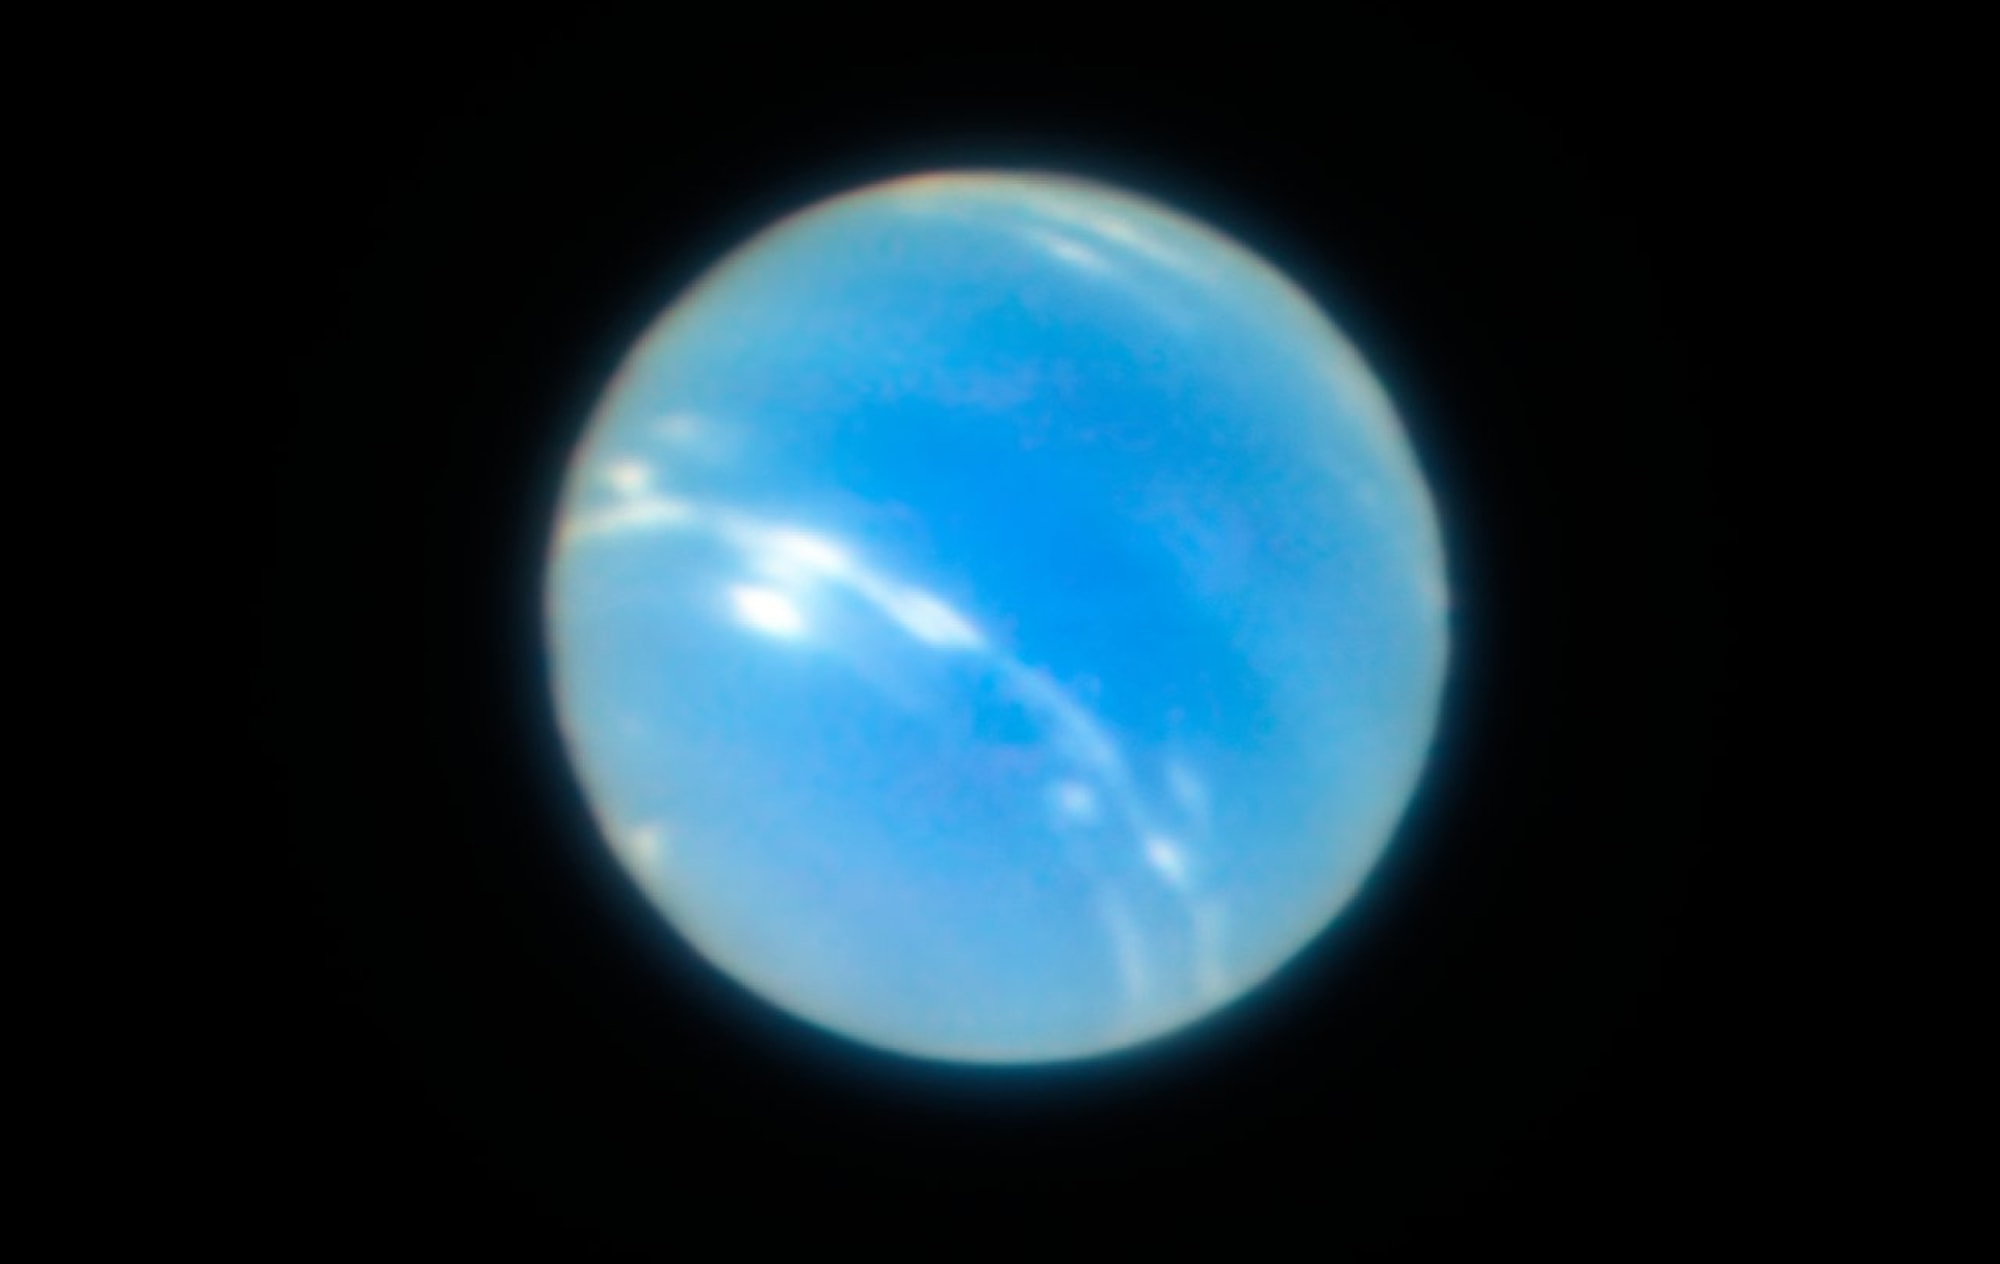 Image of the light-blue planet Neptune against black background